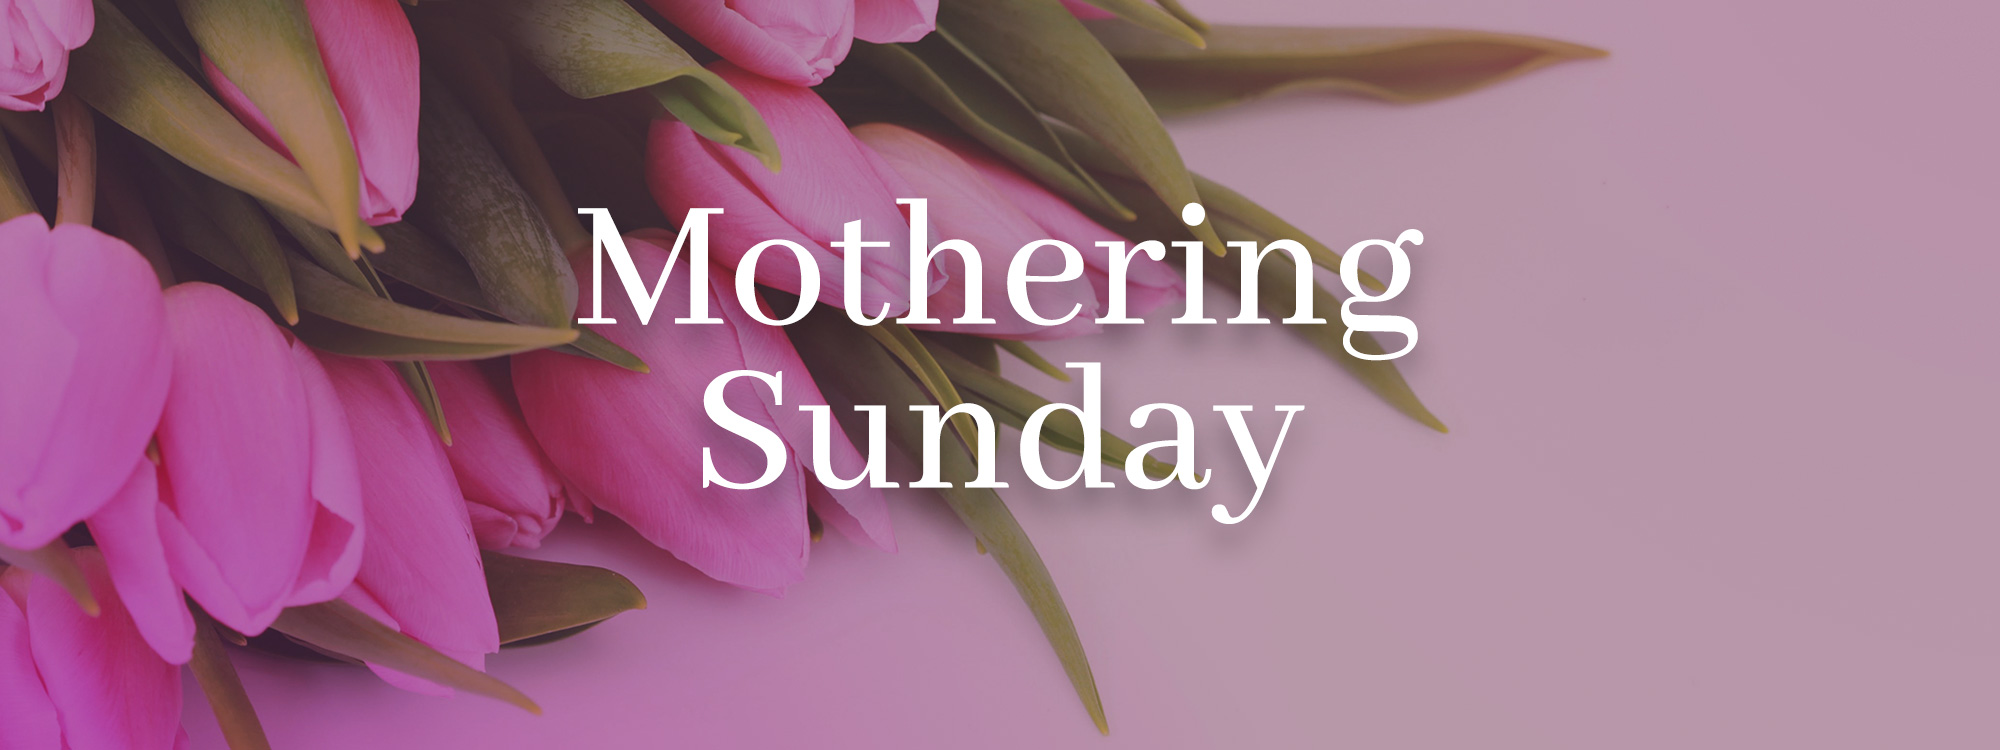 Mothering-Sunday-2-2000x750